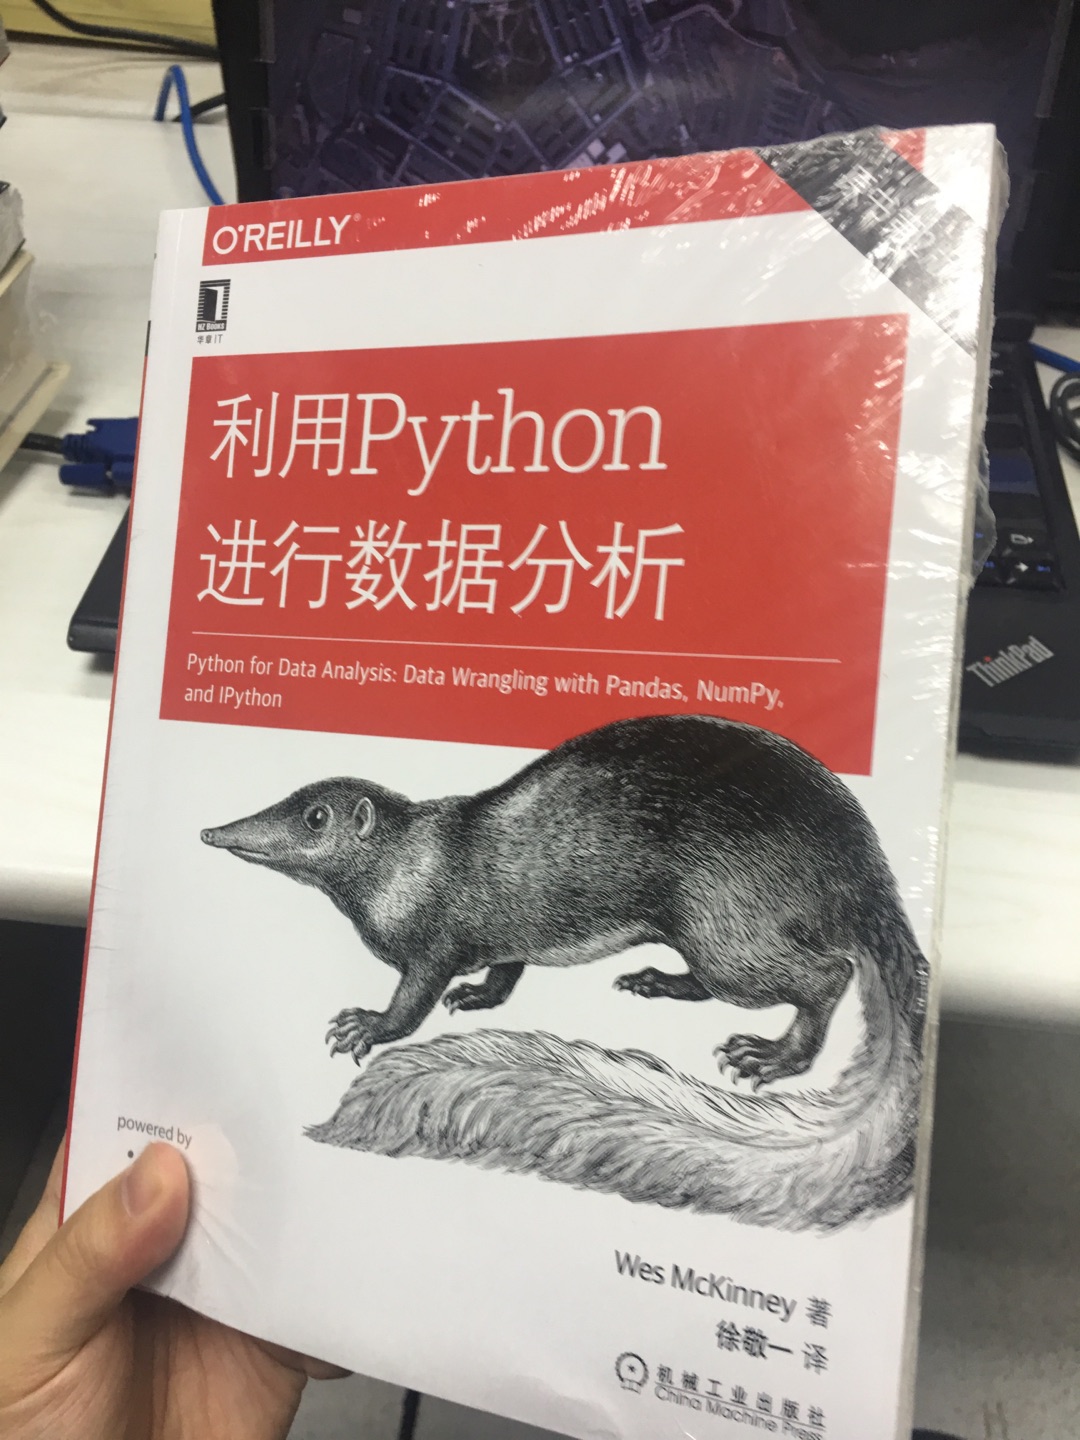 python是一款很好的高级语言，希望可以读到它的读者可以学习很多数据分析与这款语言的实际应用。